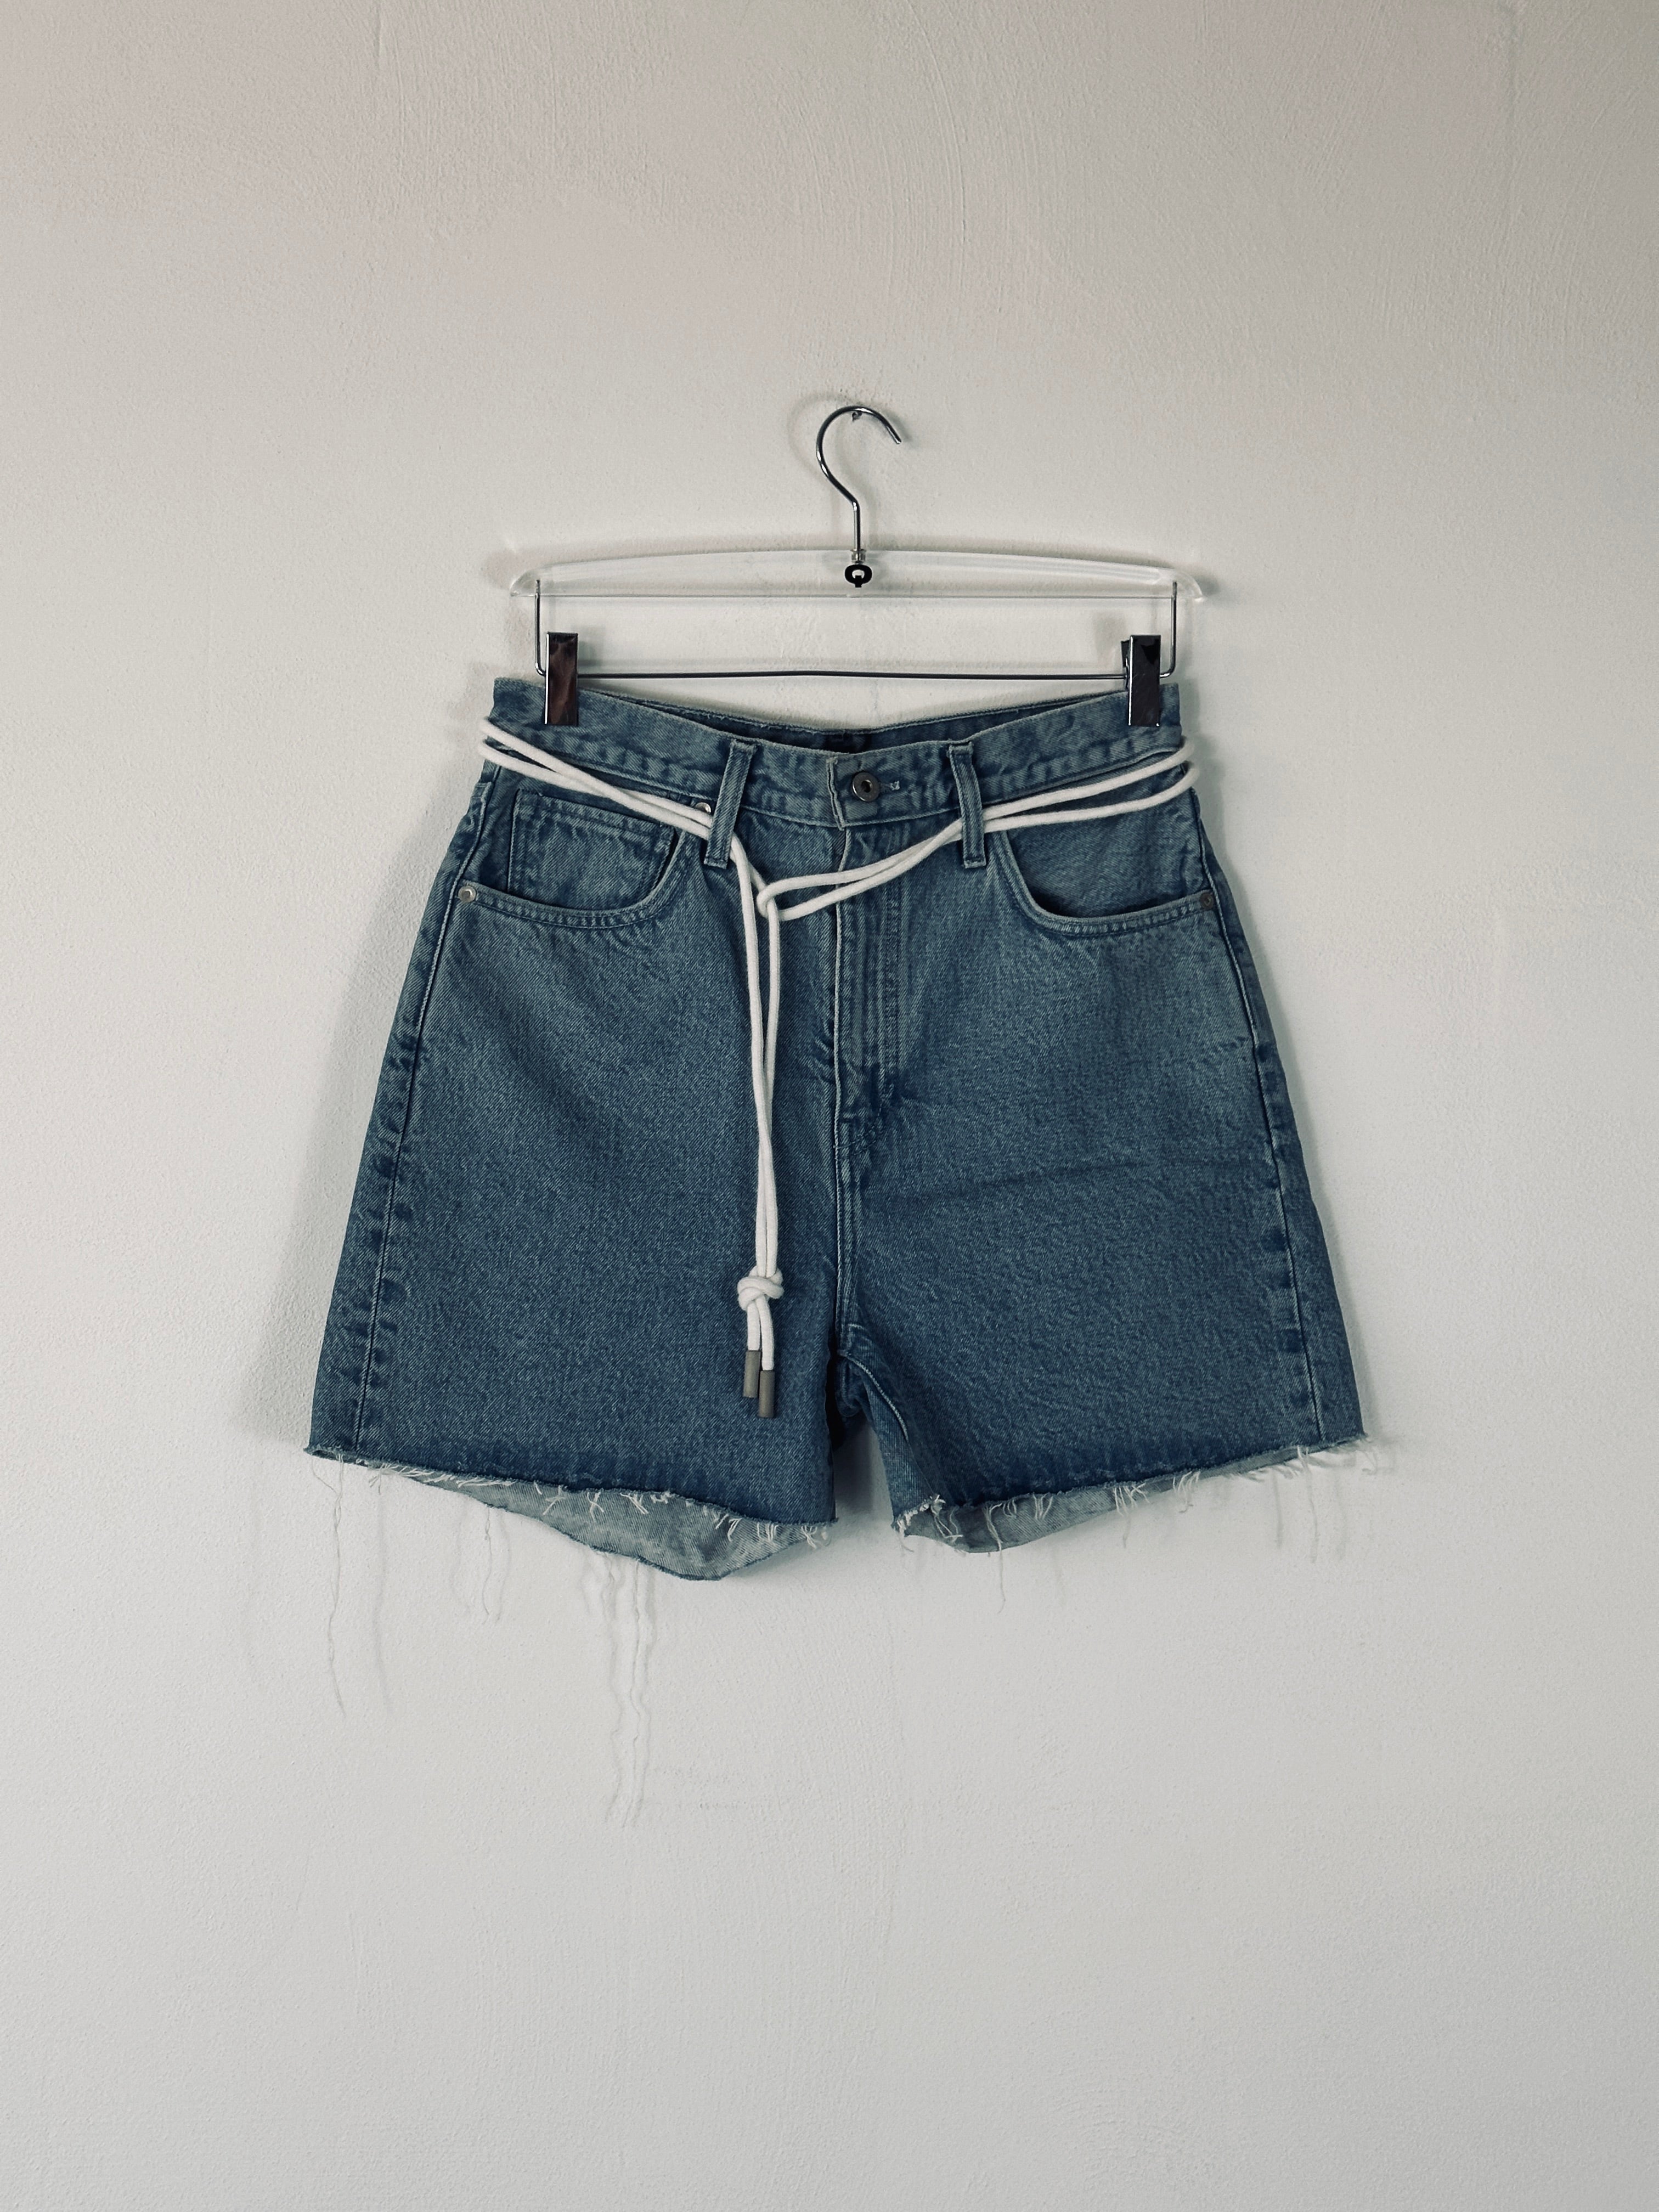 Off-White Collab Denim Shorts